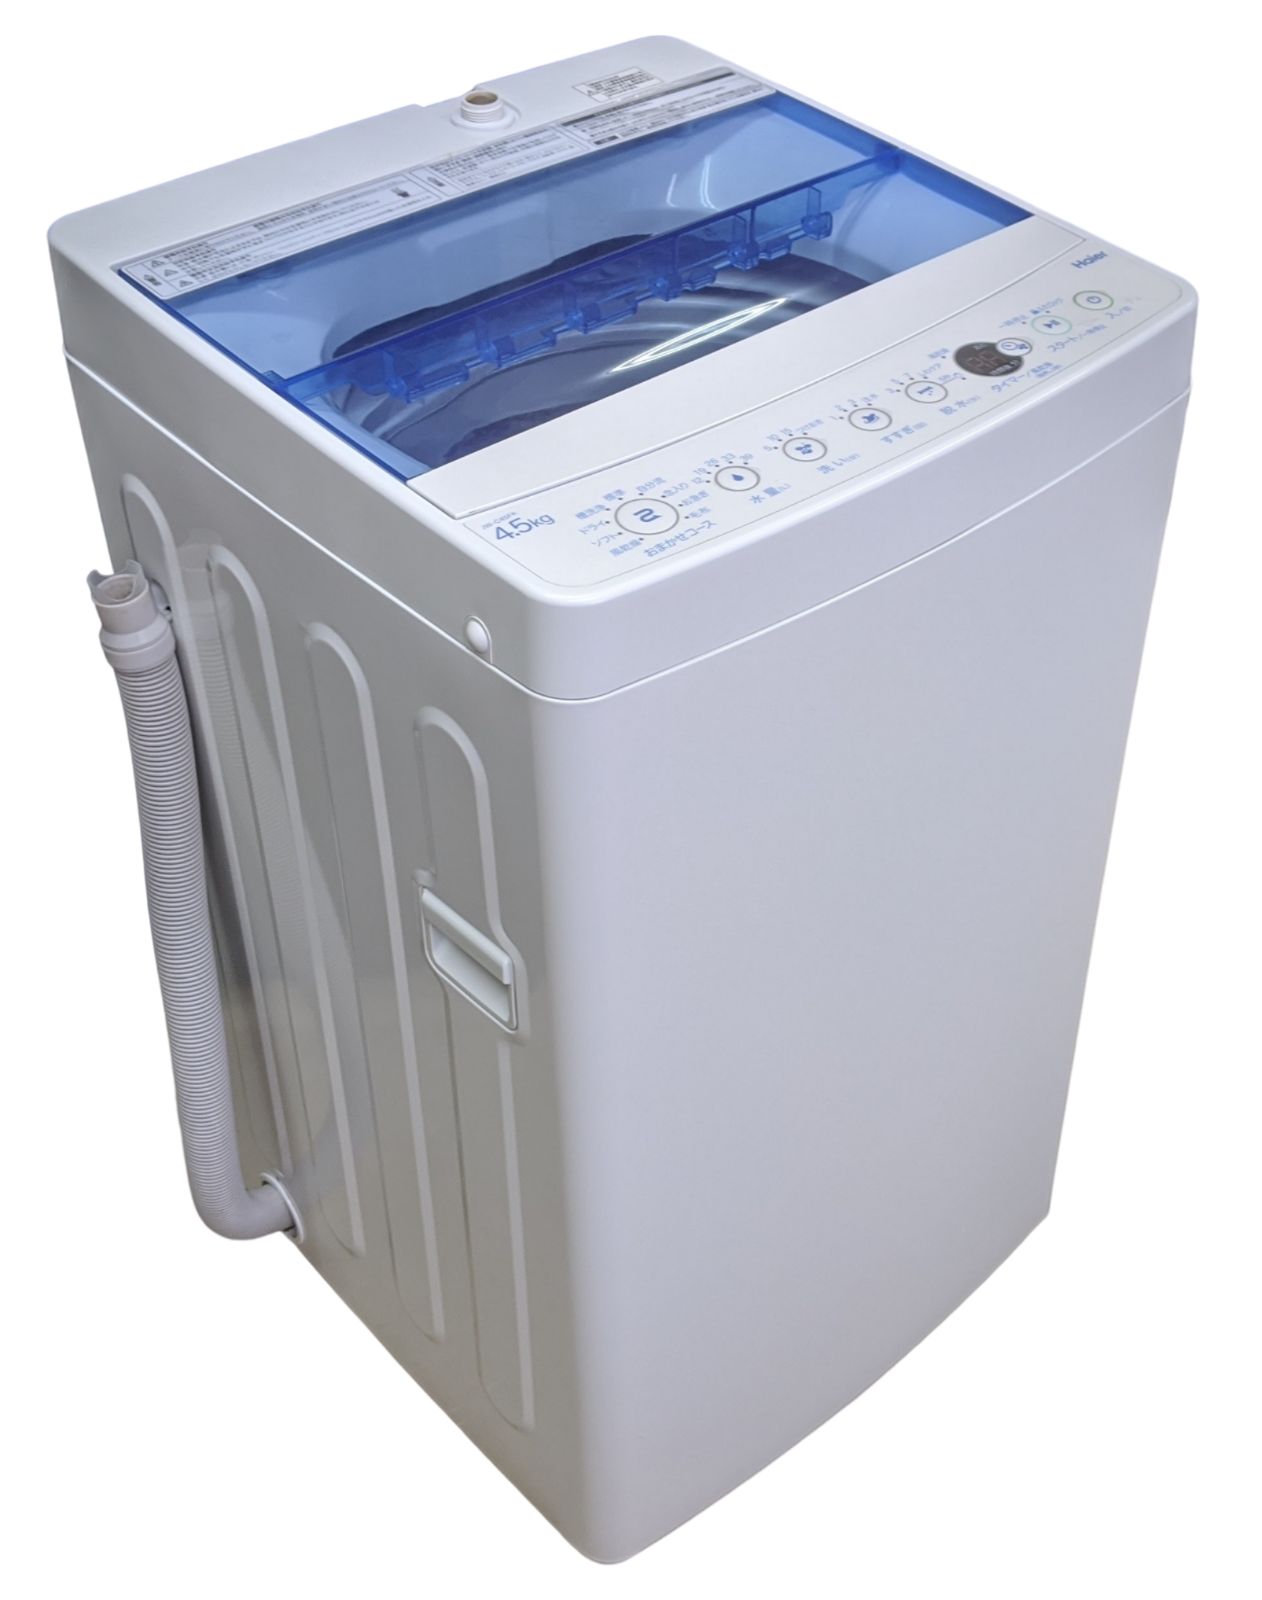 約500mmハイアール4.5kg 簡易乾燥機能付き 全自動洗濯機  JW-C45CK